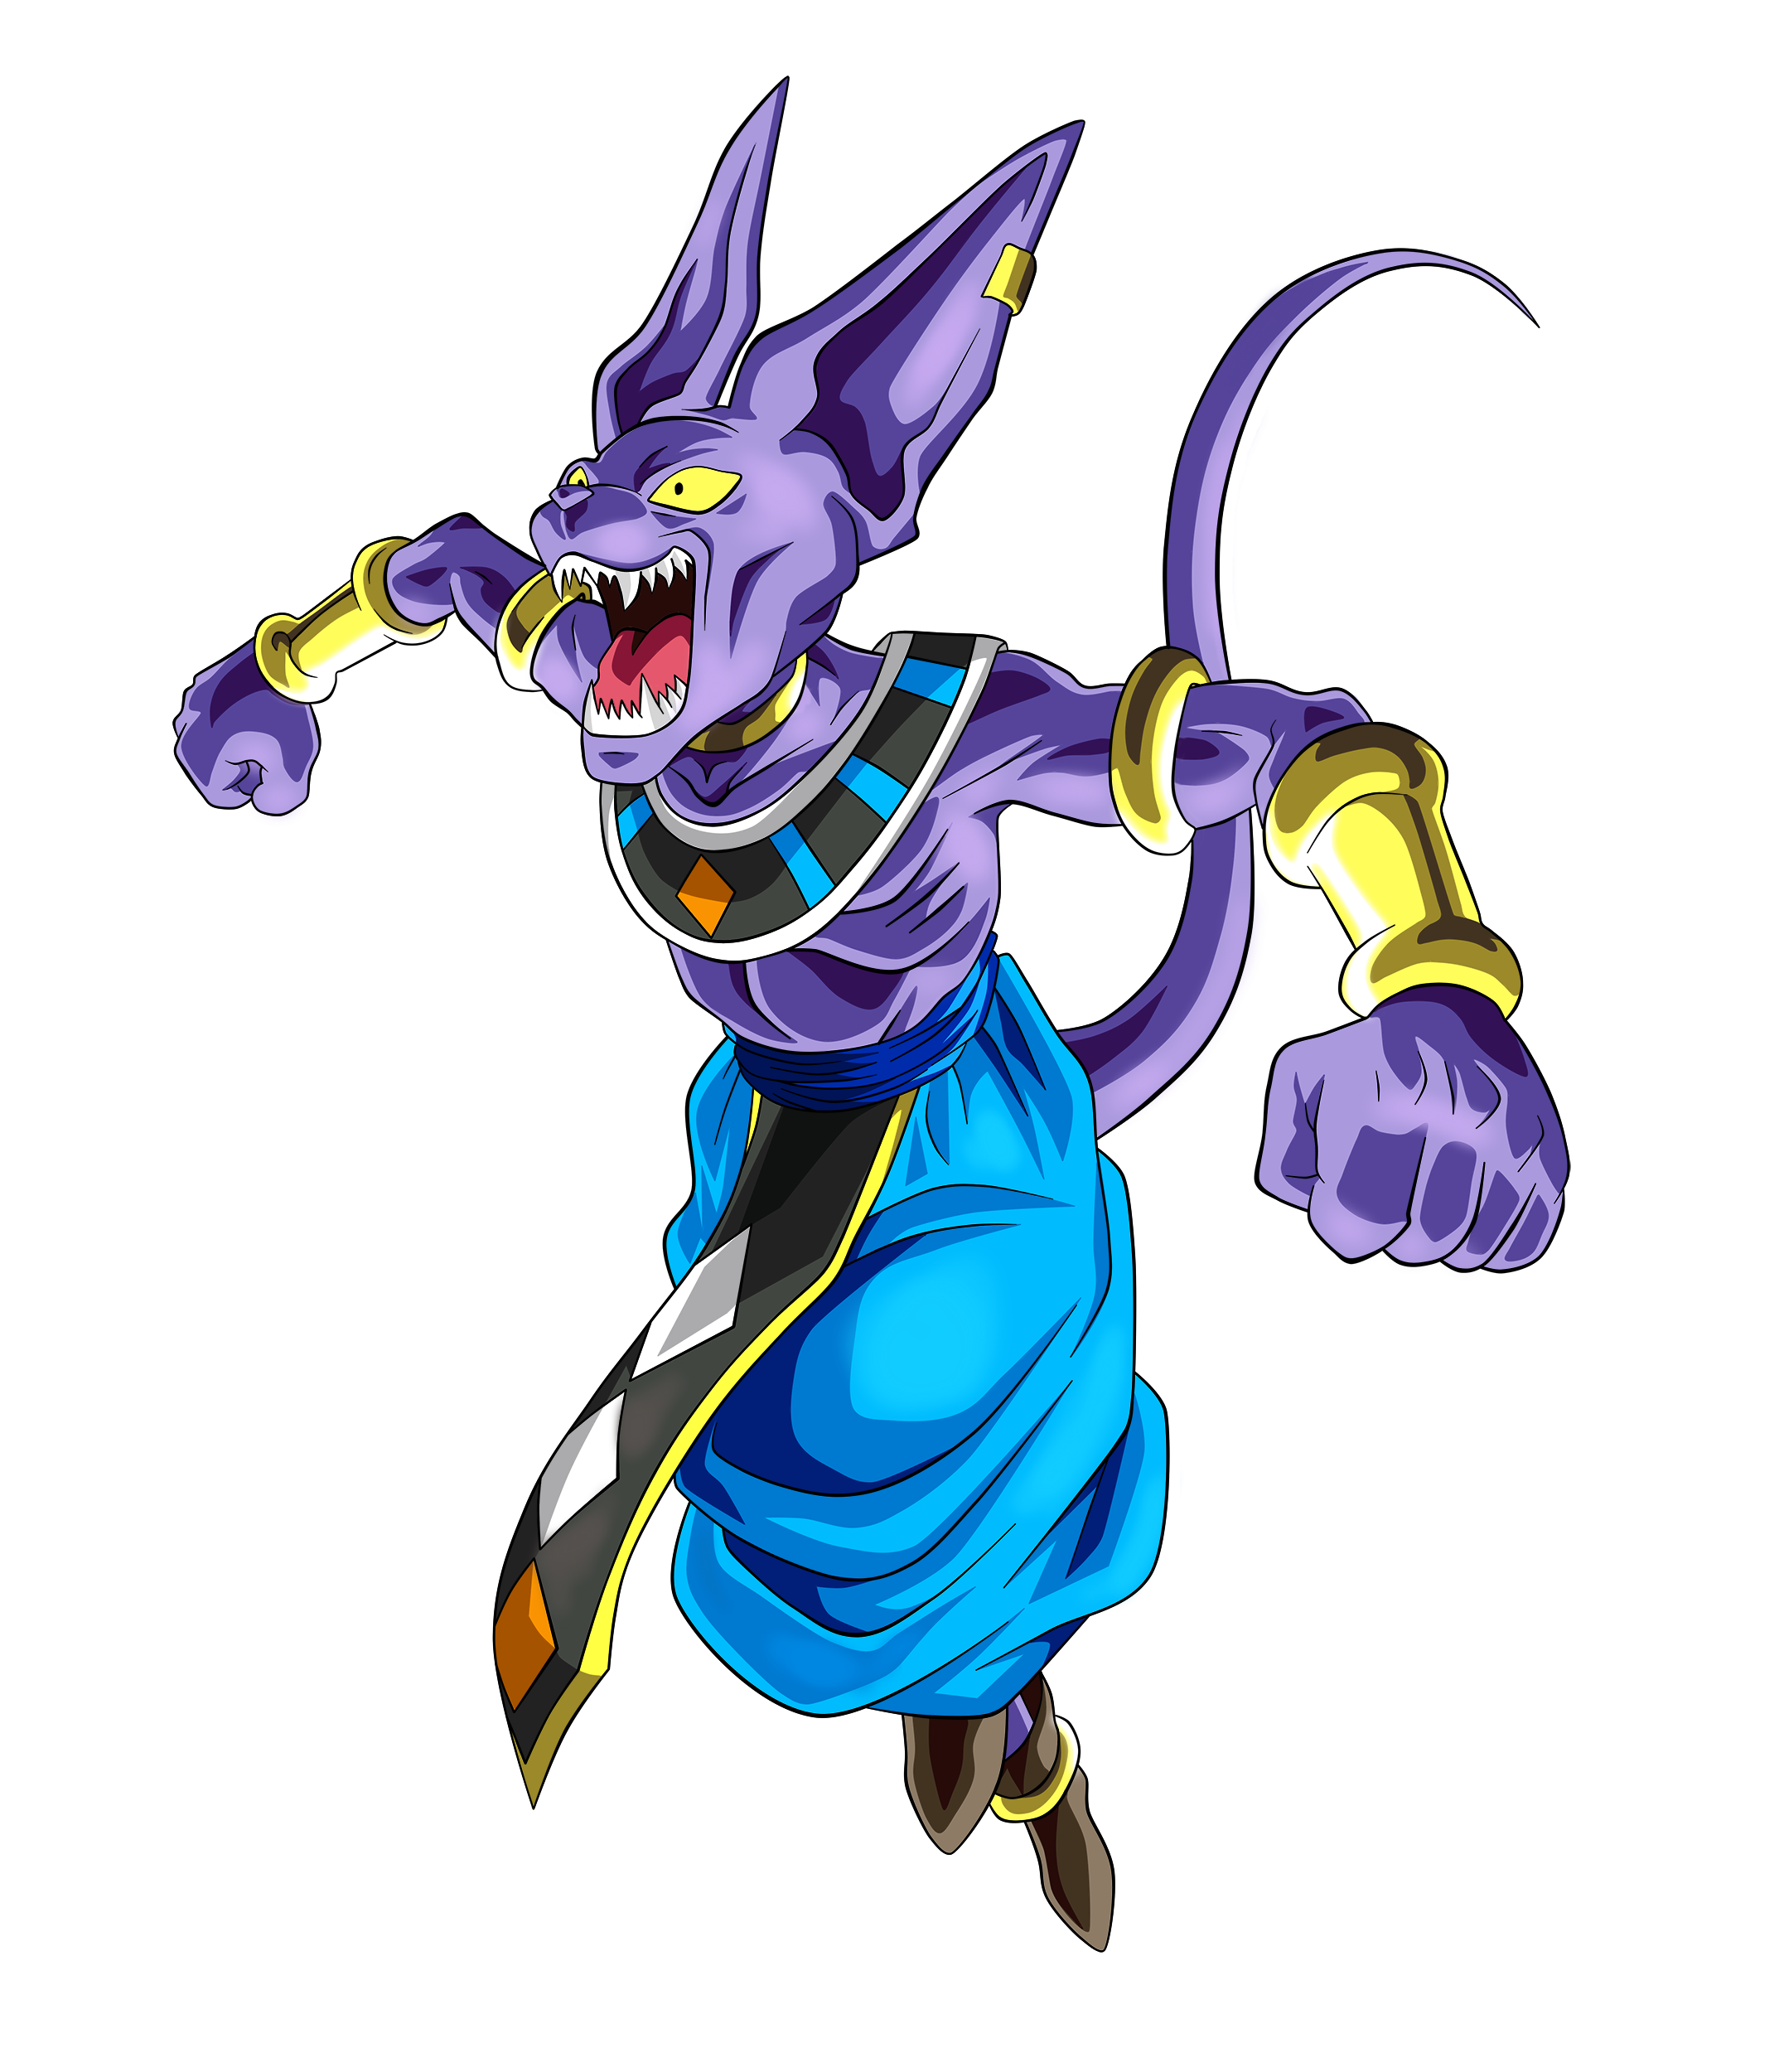 BEERUS the Destroyer - God of Destruction by Goku-Kakarot on DeviantArt